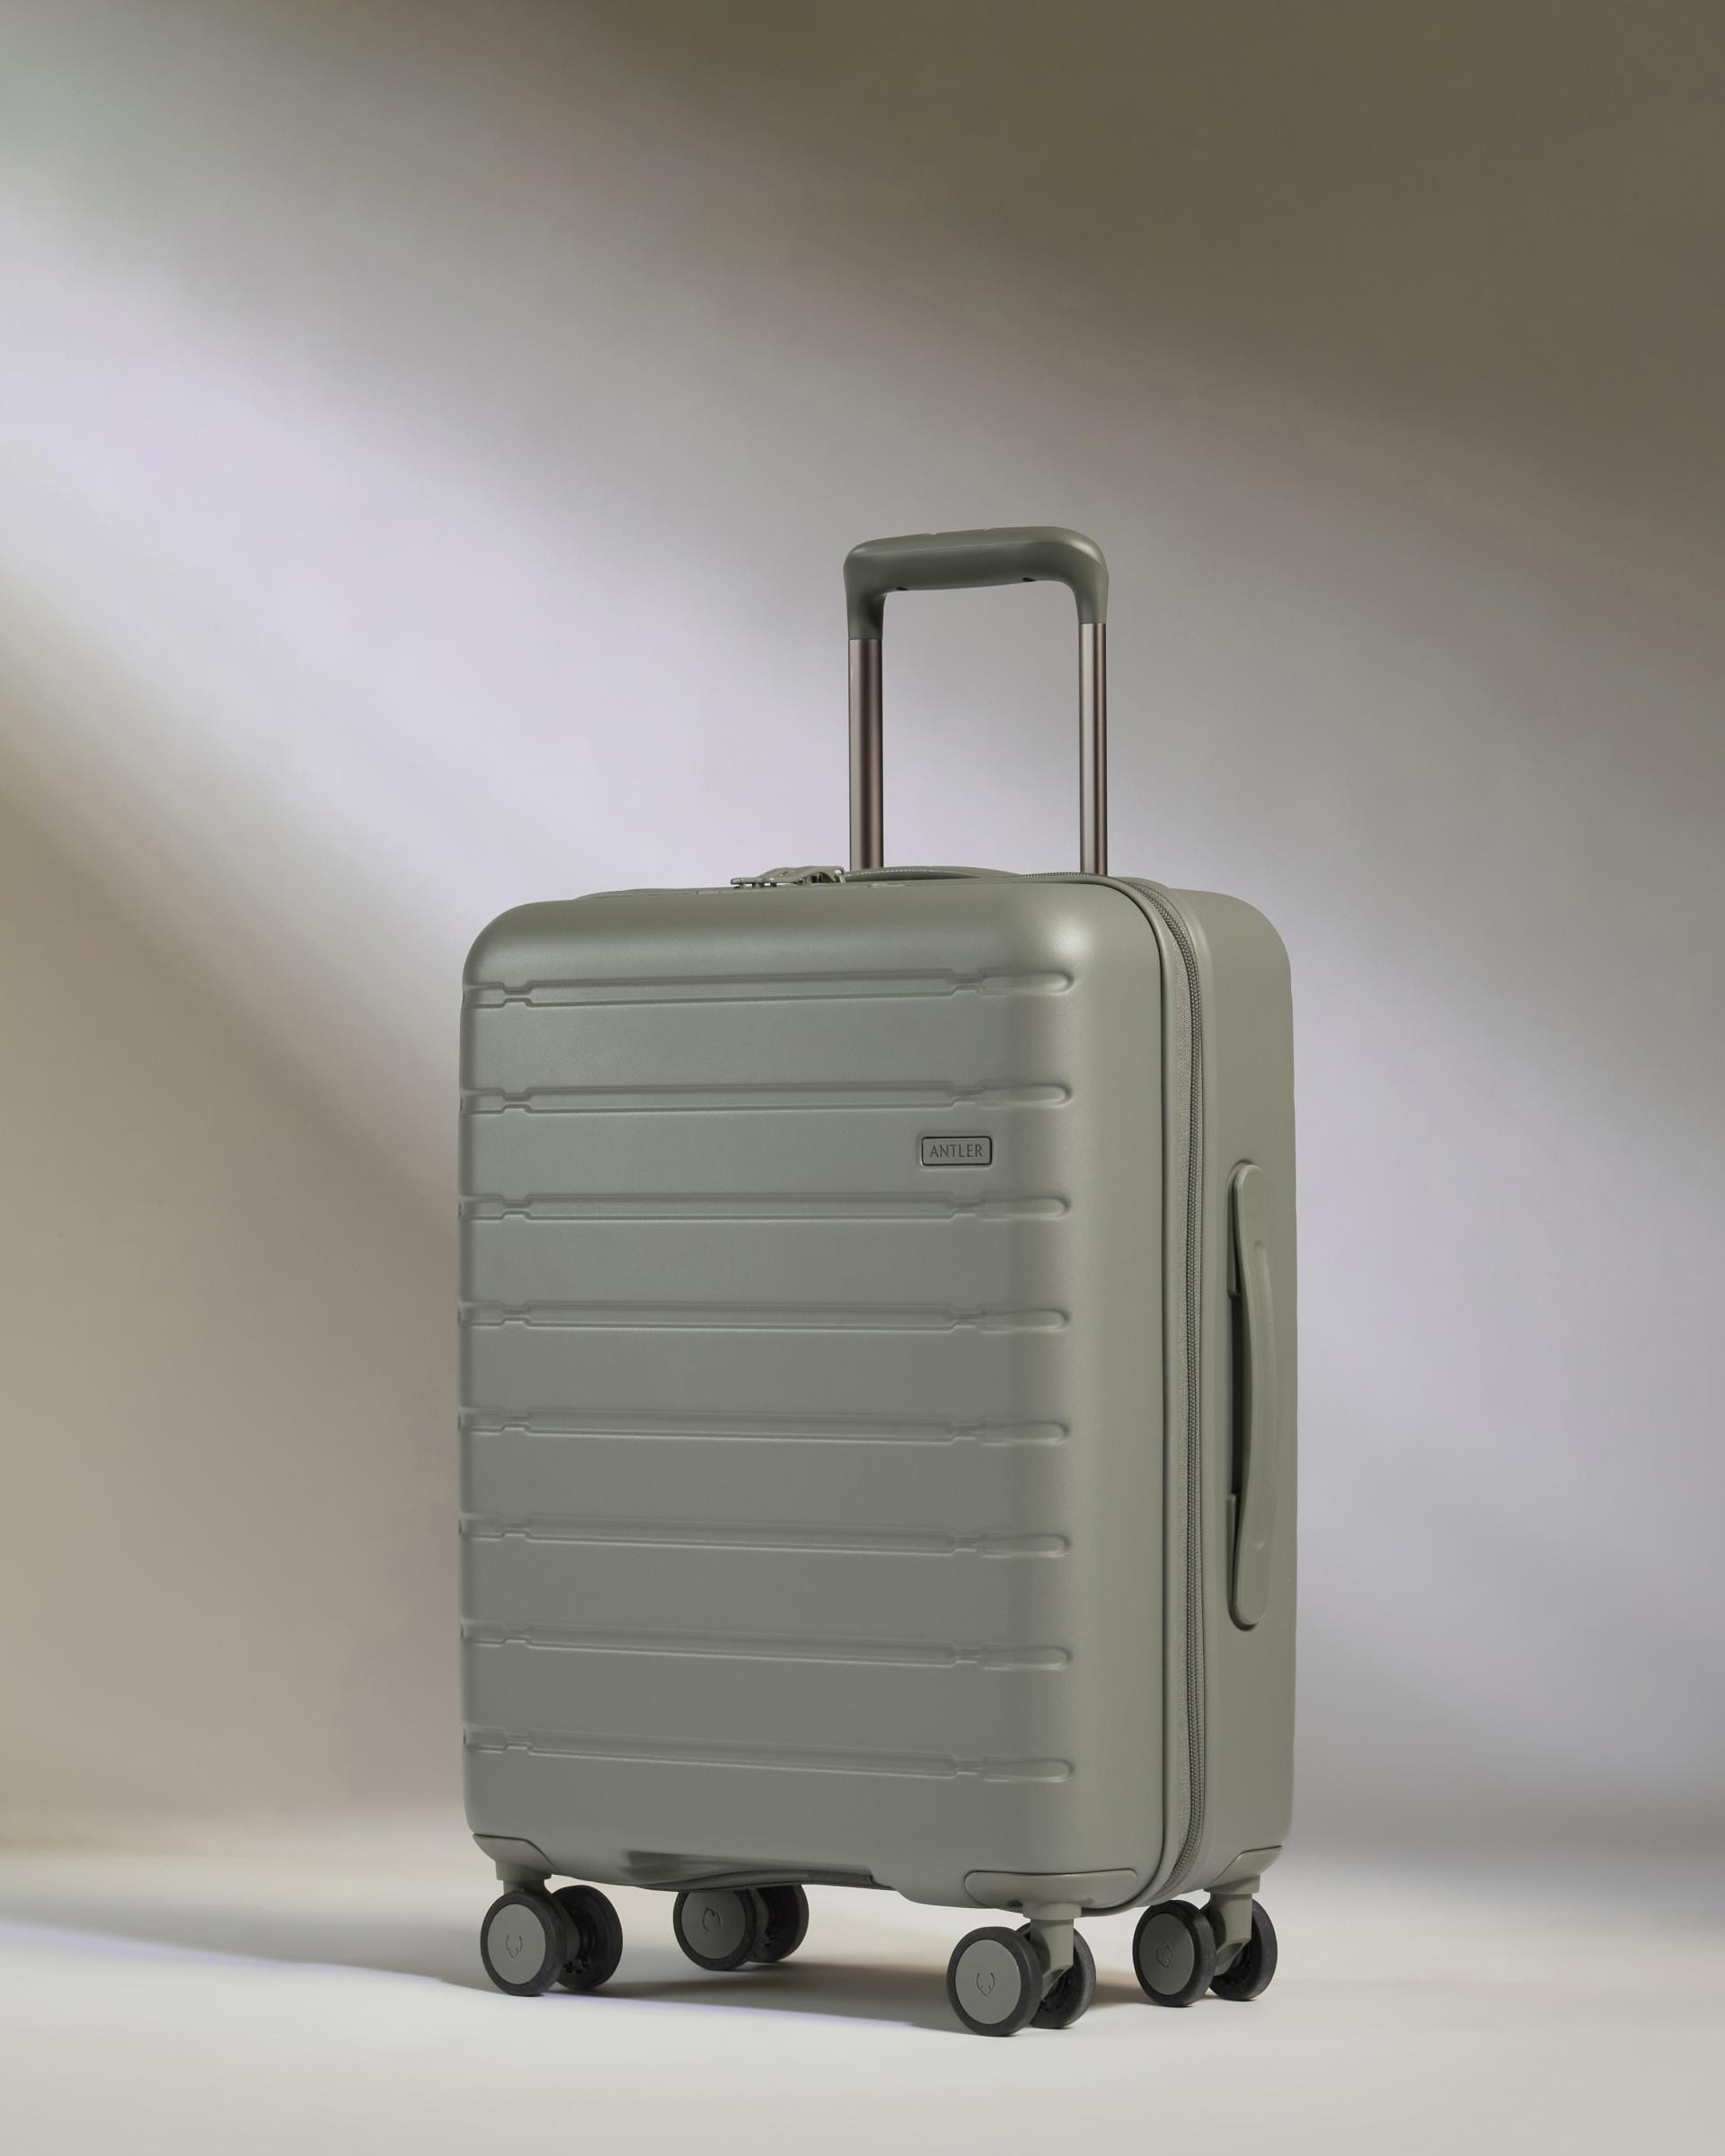 View Antler Stamford 20 Cabin Suitcase In Field Green Size 20cm x 402cm x 541cm information